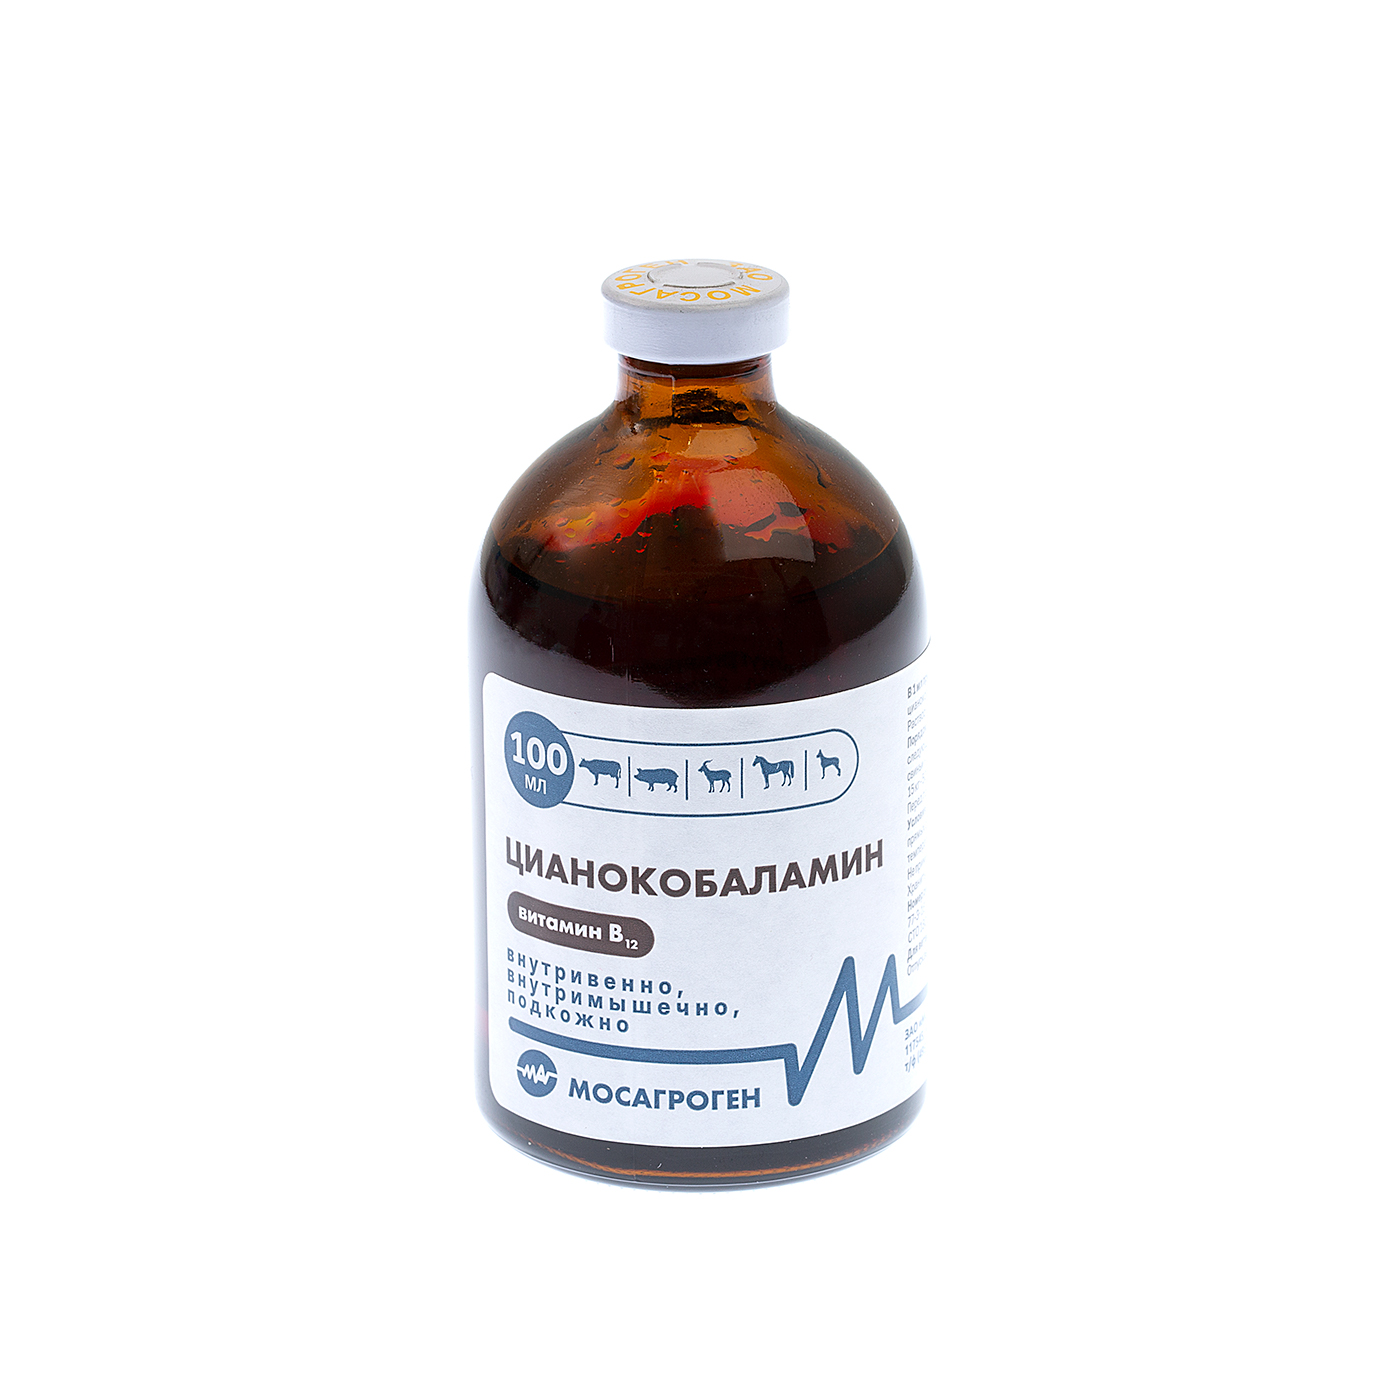 Мосагроген Цианокобаламин, витамин В12, 100мл 